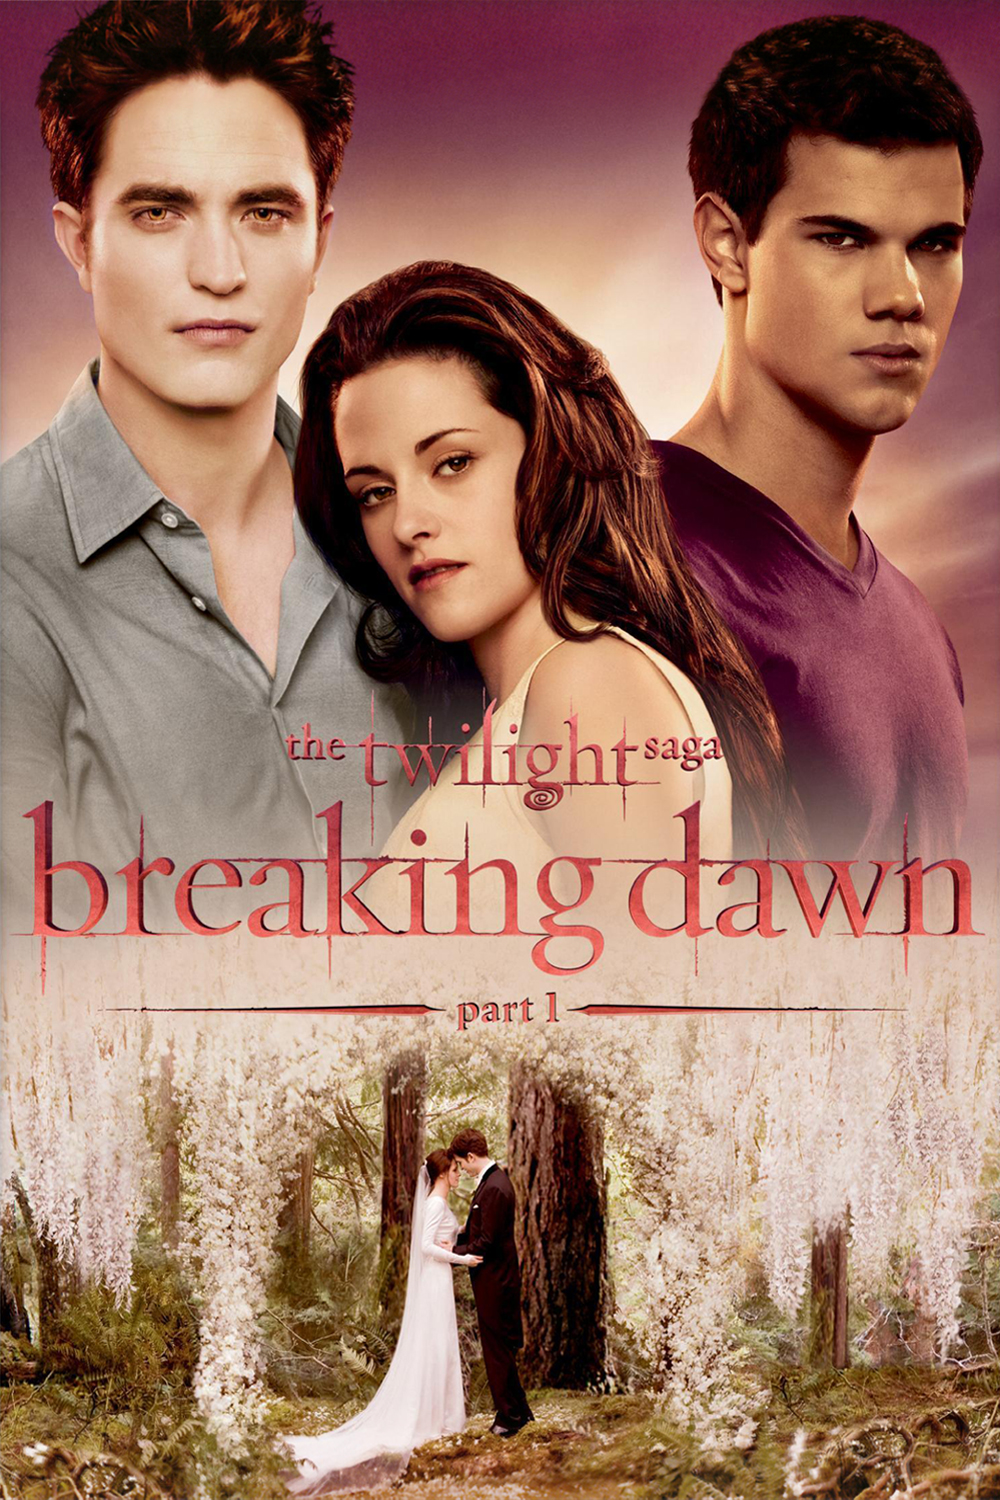 download twilight saga breaking dawn part 2 bluray indowebster